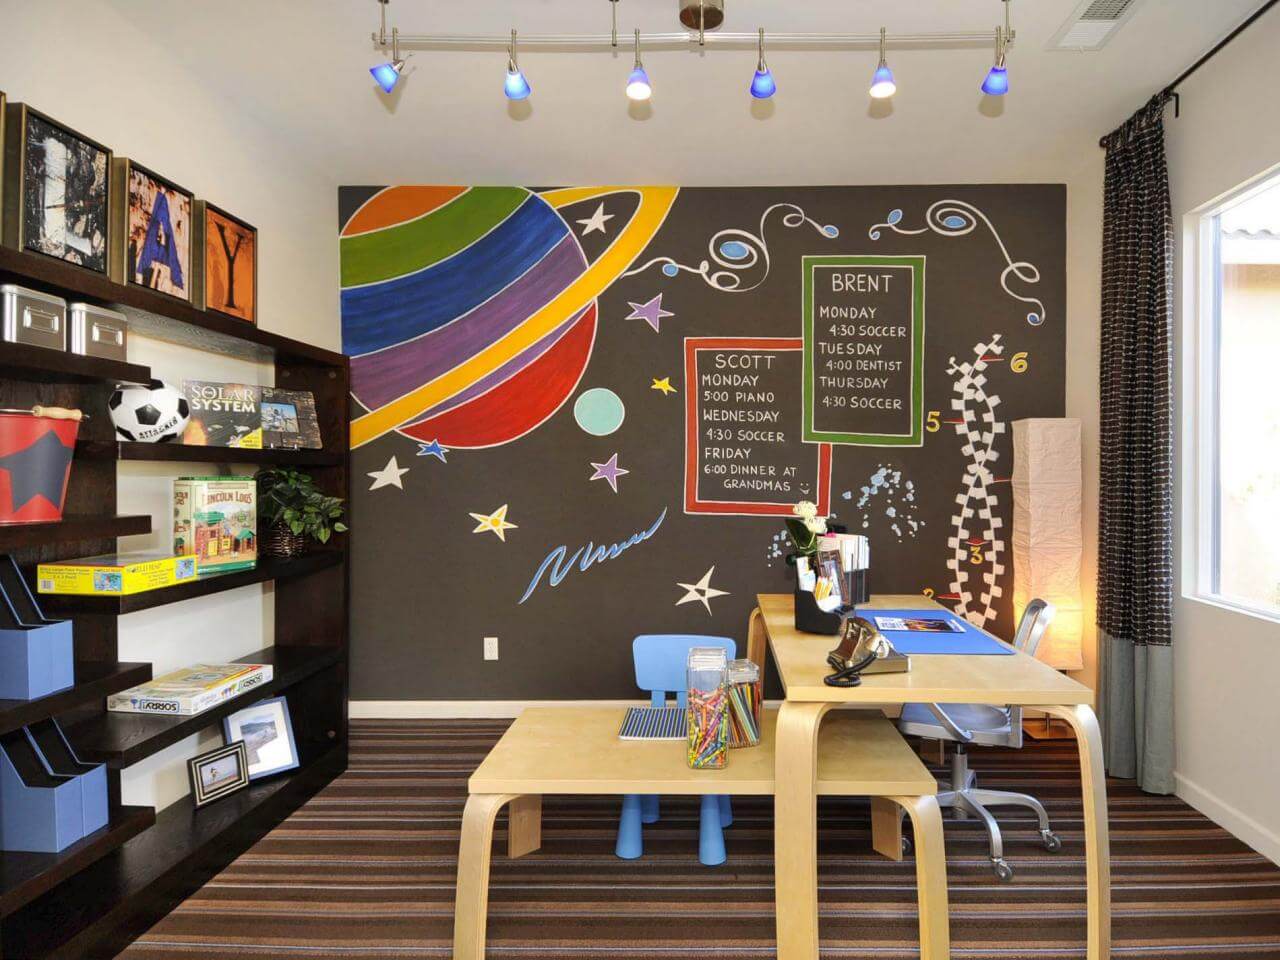 Information hub is a Homeschool classroom idea to help keep organized